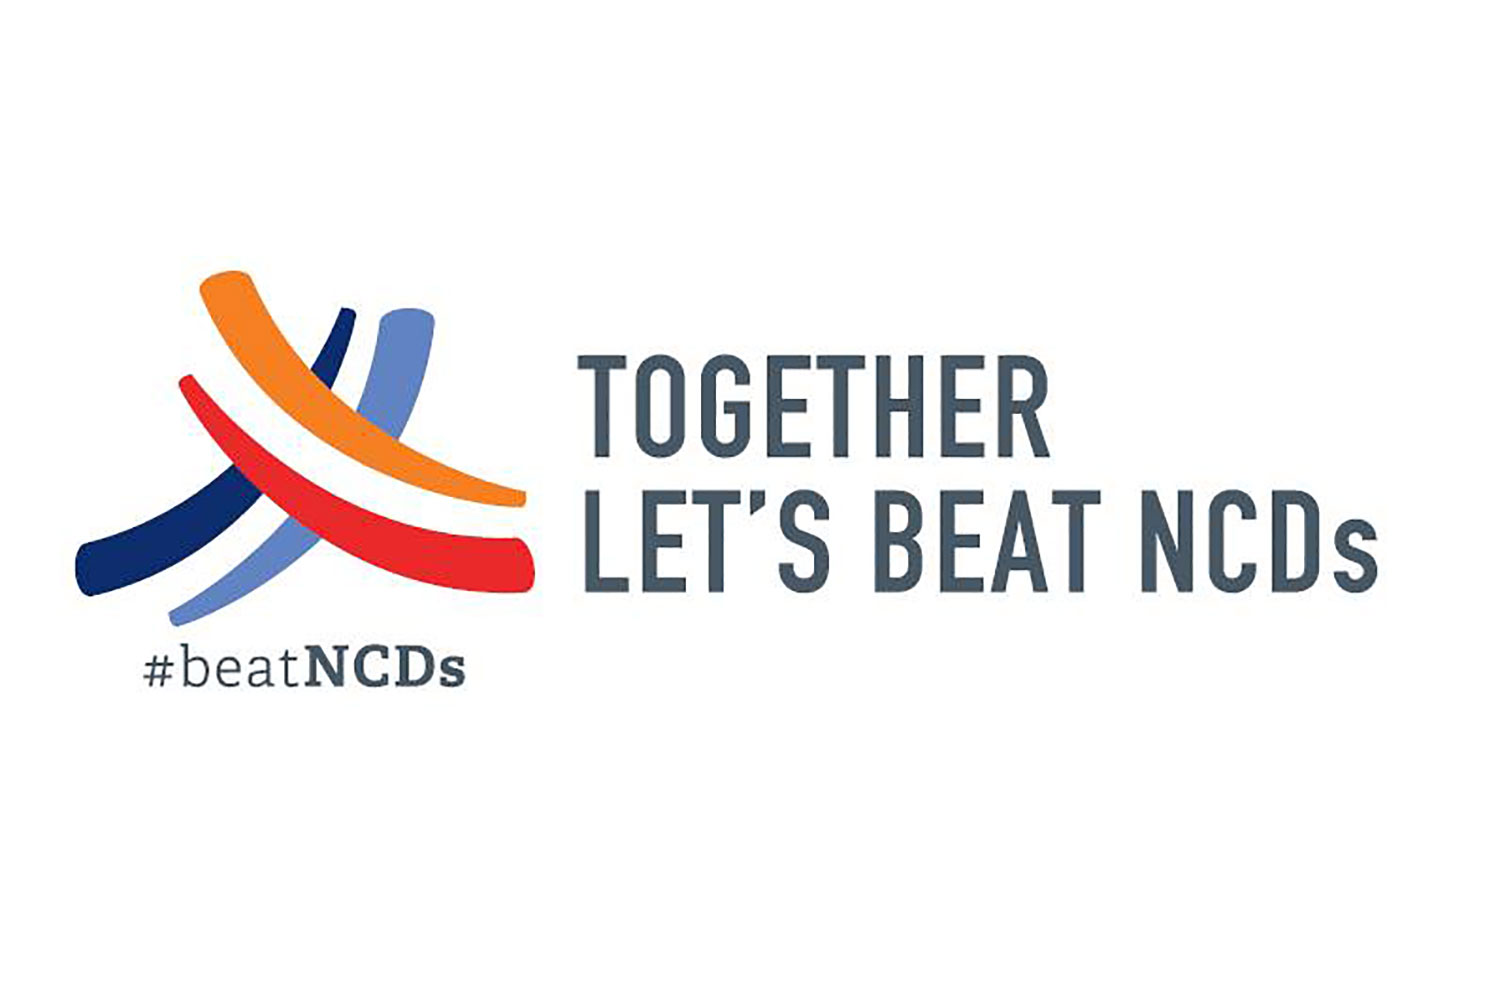 NCD Awareness Day